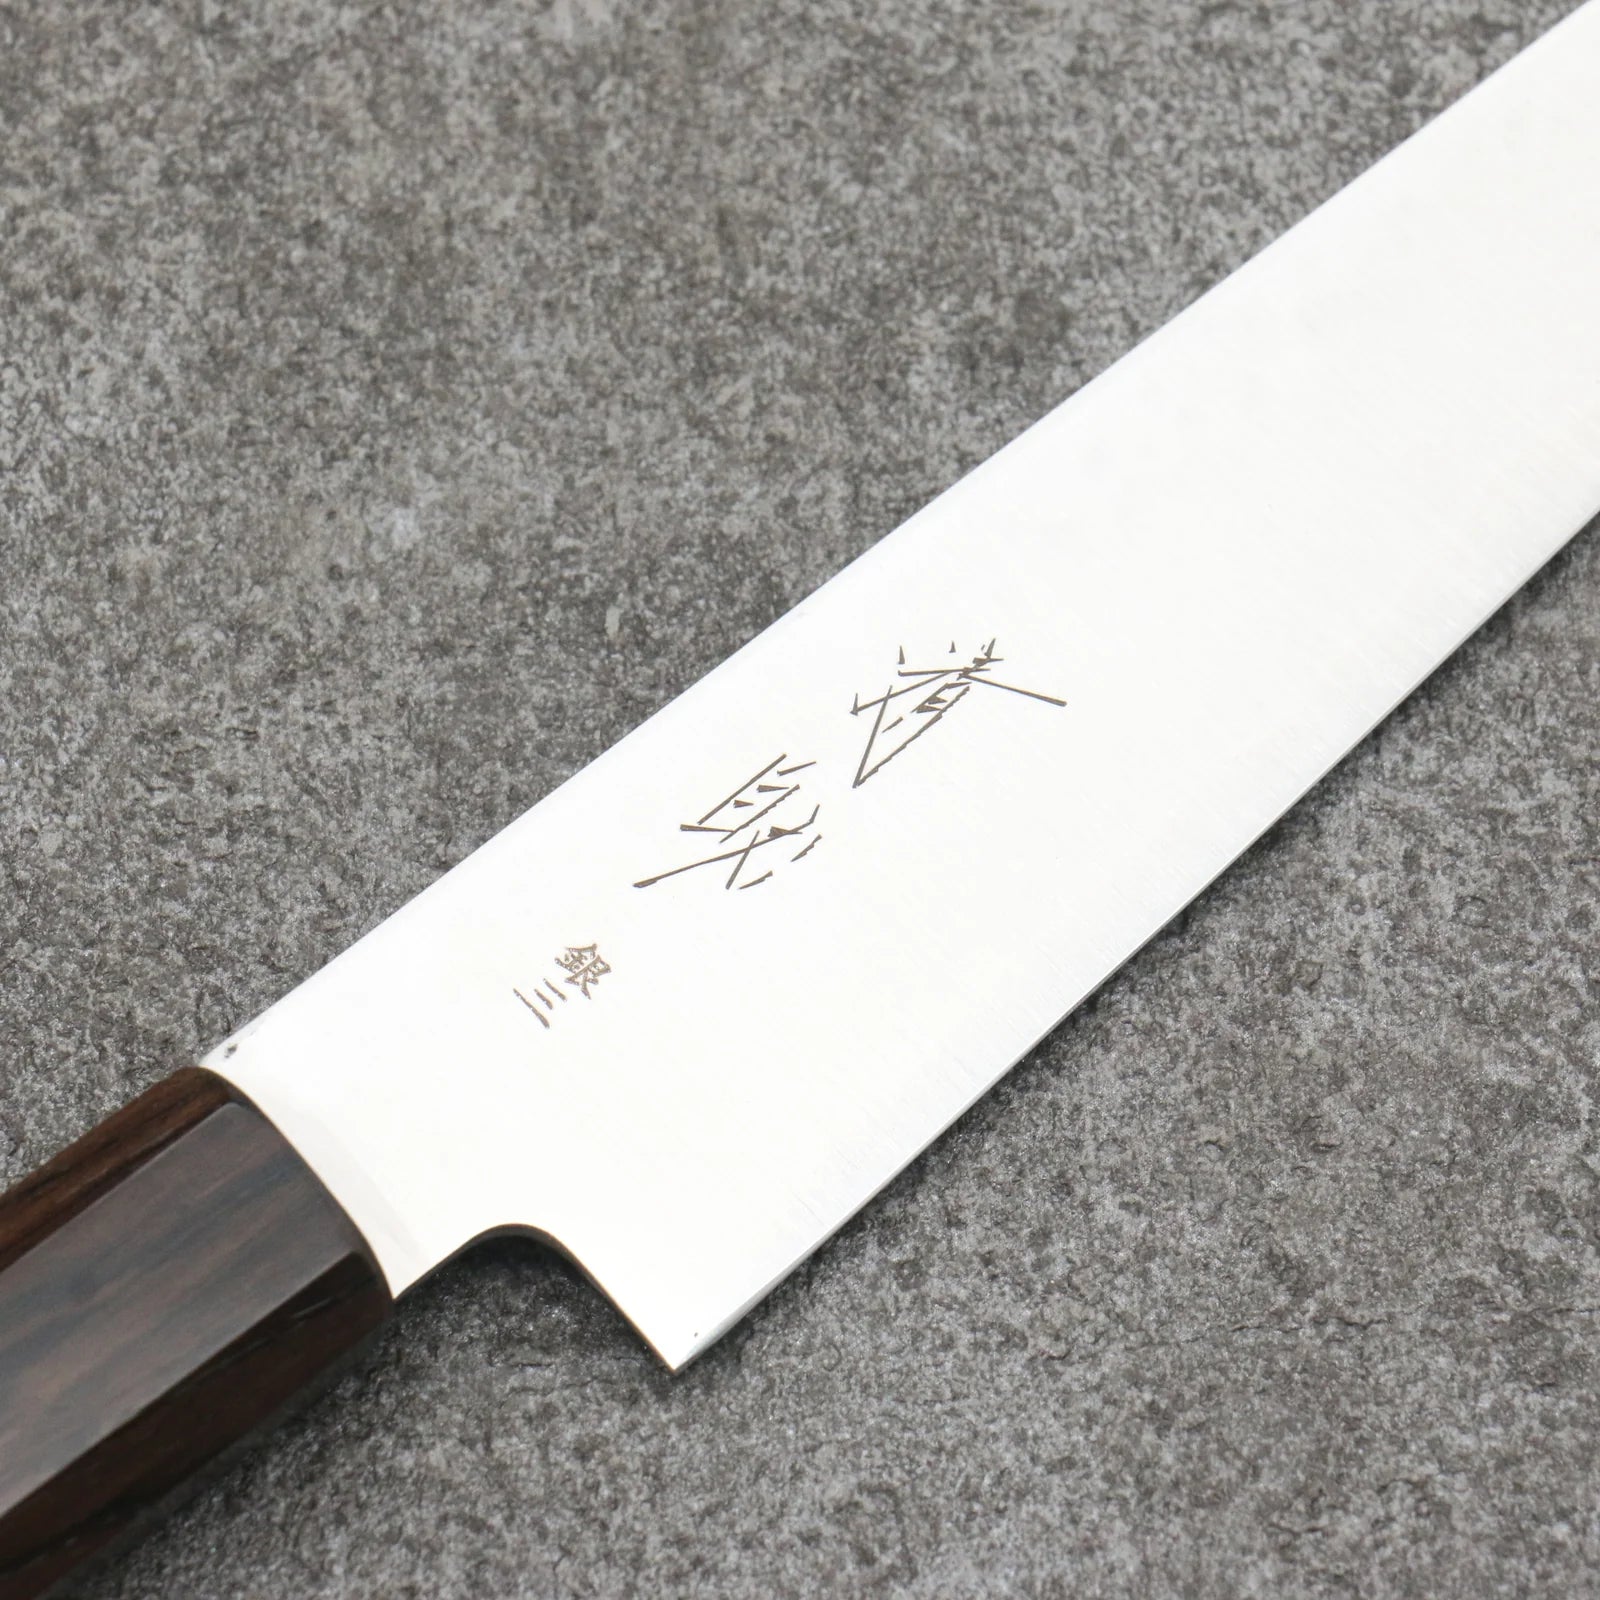 Seisuke Silver Steel No.3 Kiritsuke Petty-Utility Japanese Knife 150mm Ebony Wood Handle